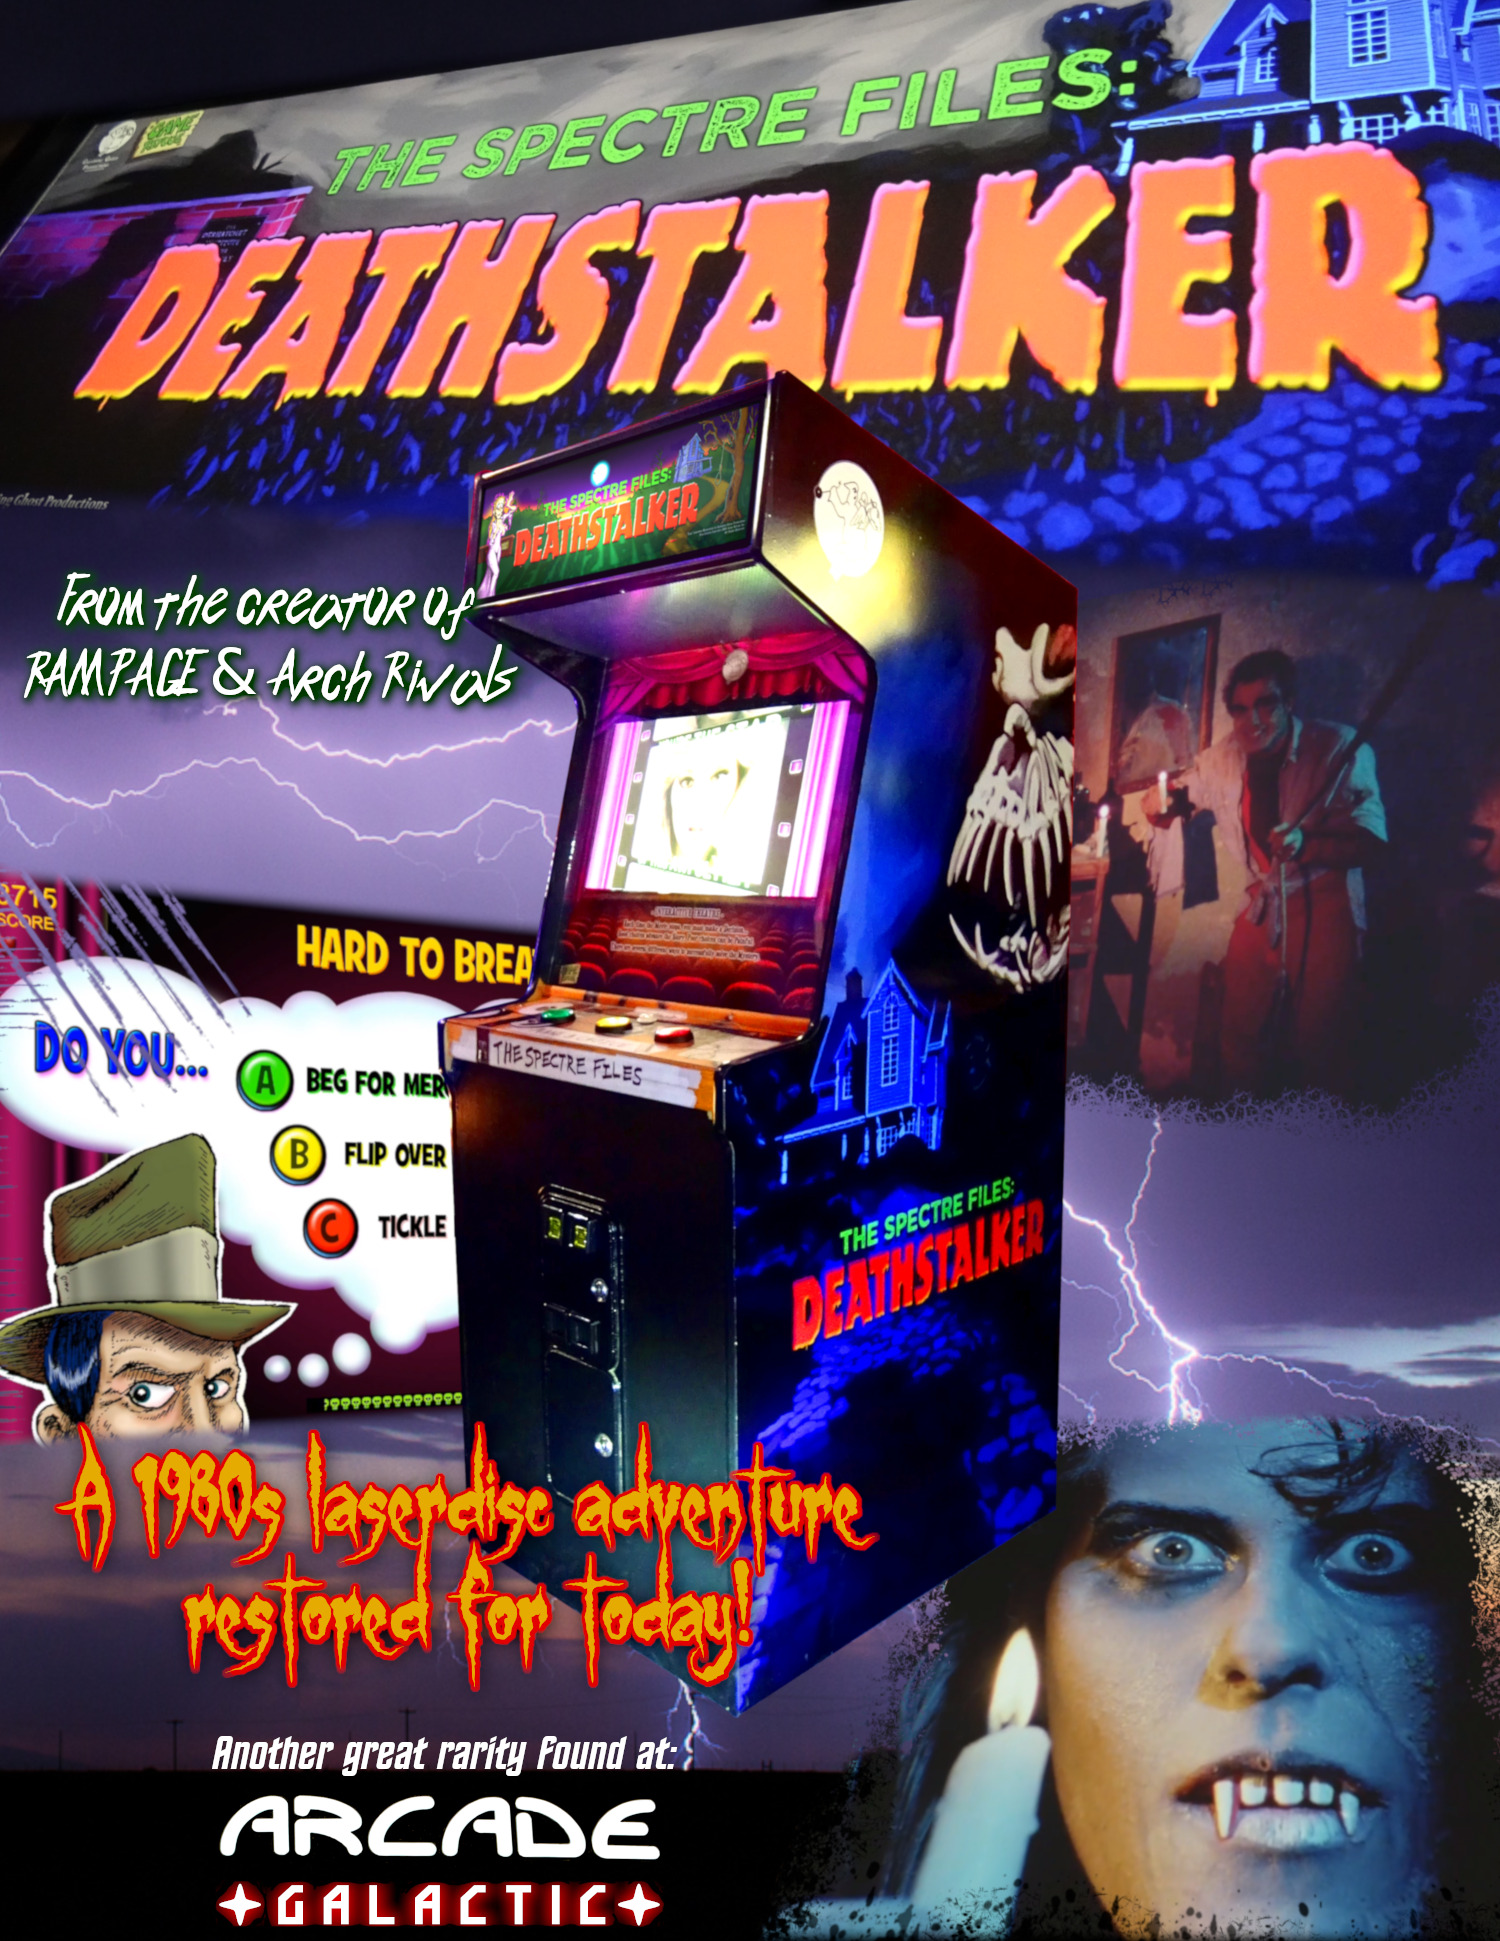 The Spectre Files: Deathstalker